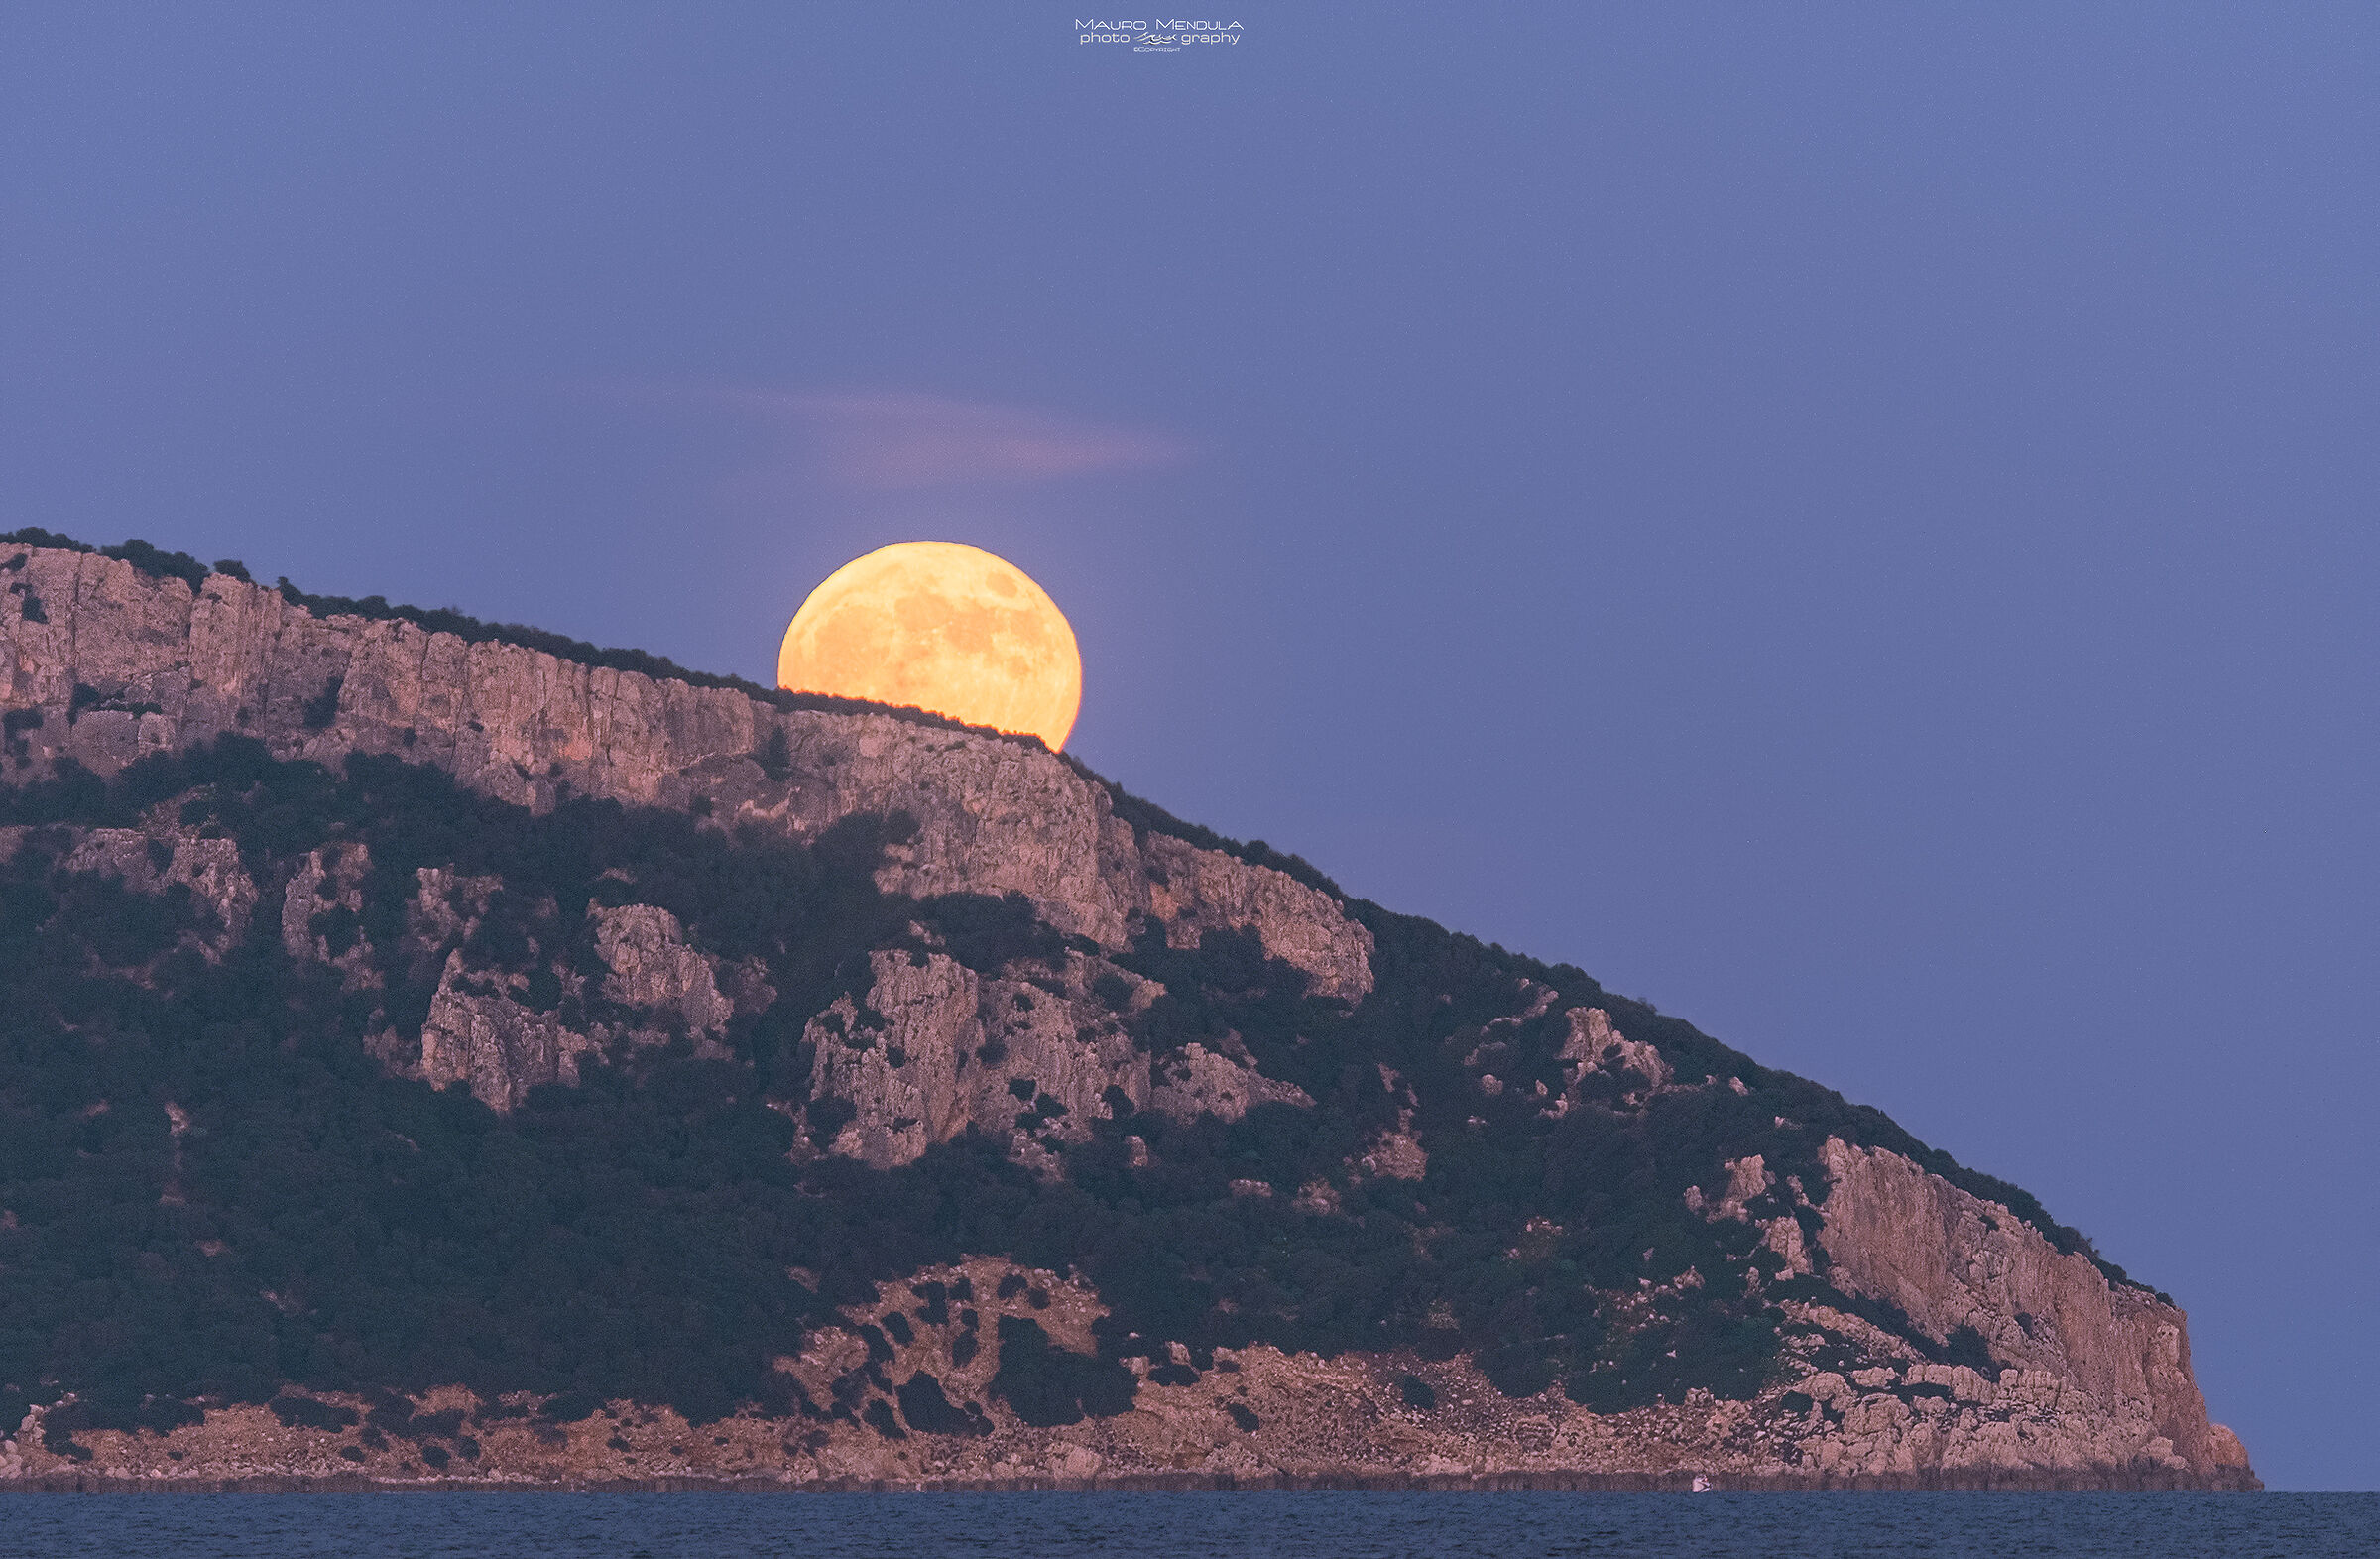 Figarolo (Golfo Aranci) and the full moon...